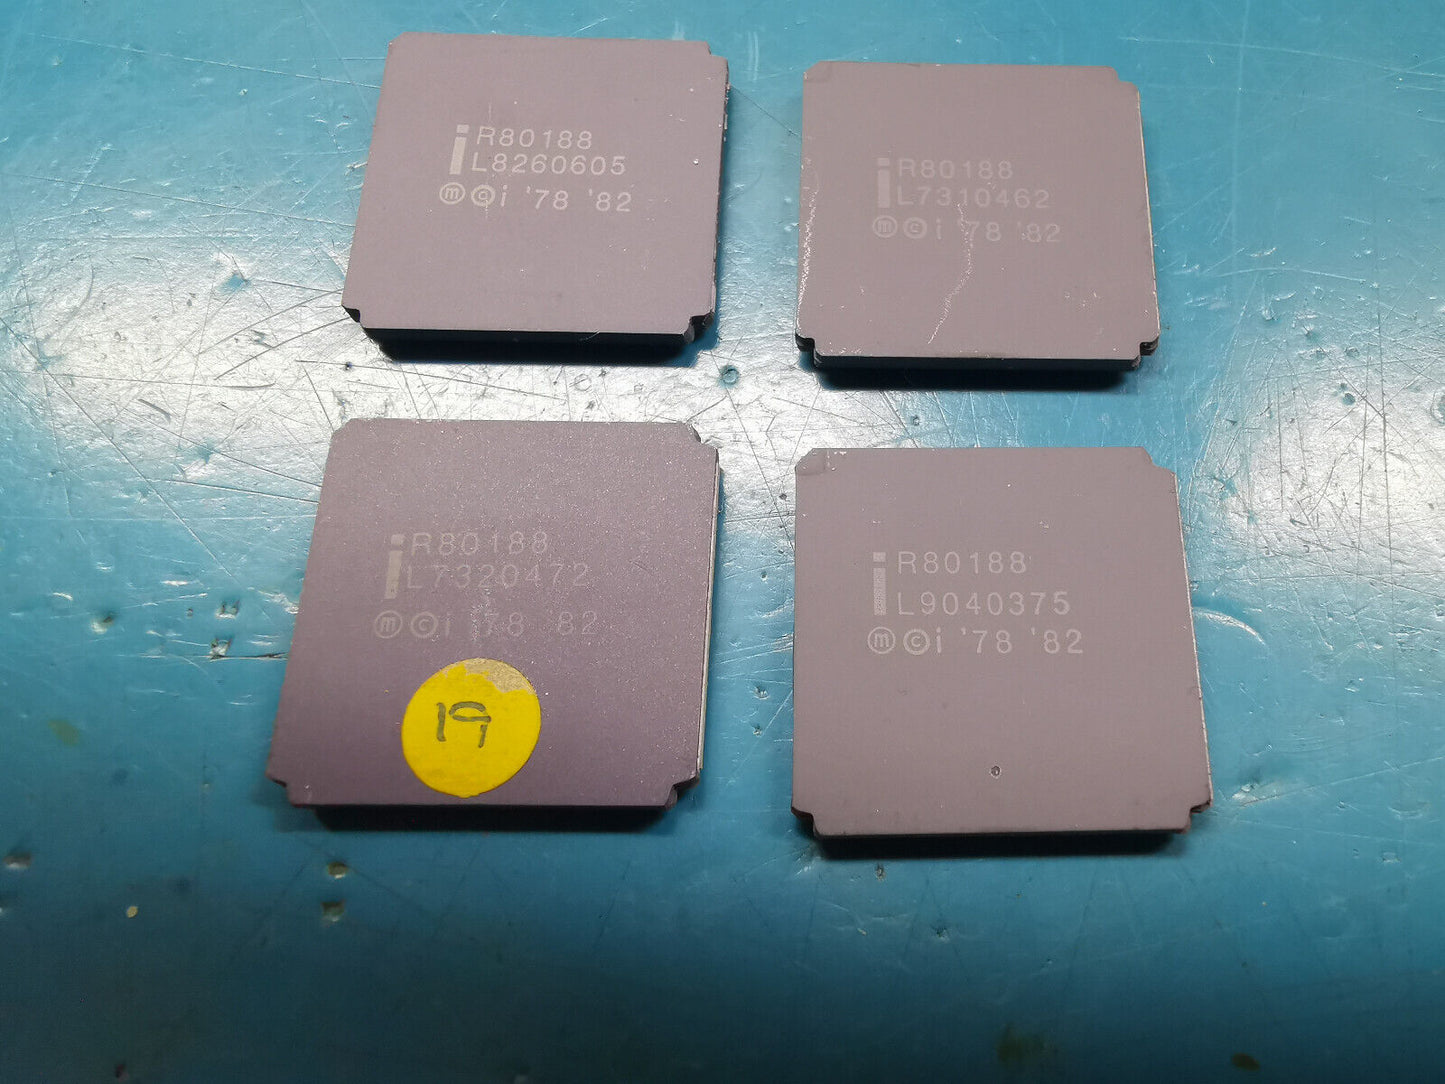 4pcs Genuine Intel R80188 8Bit Microprocessor From Military Test Gear